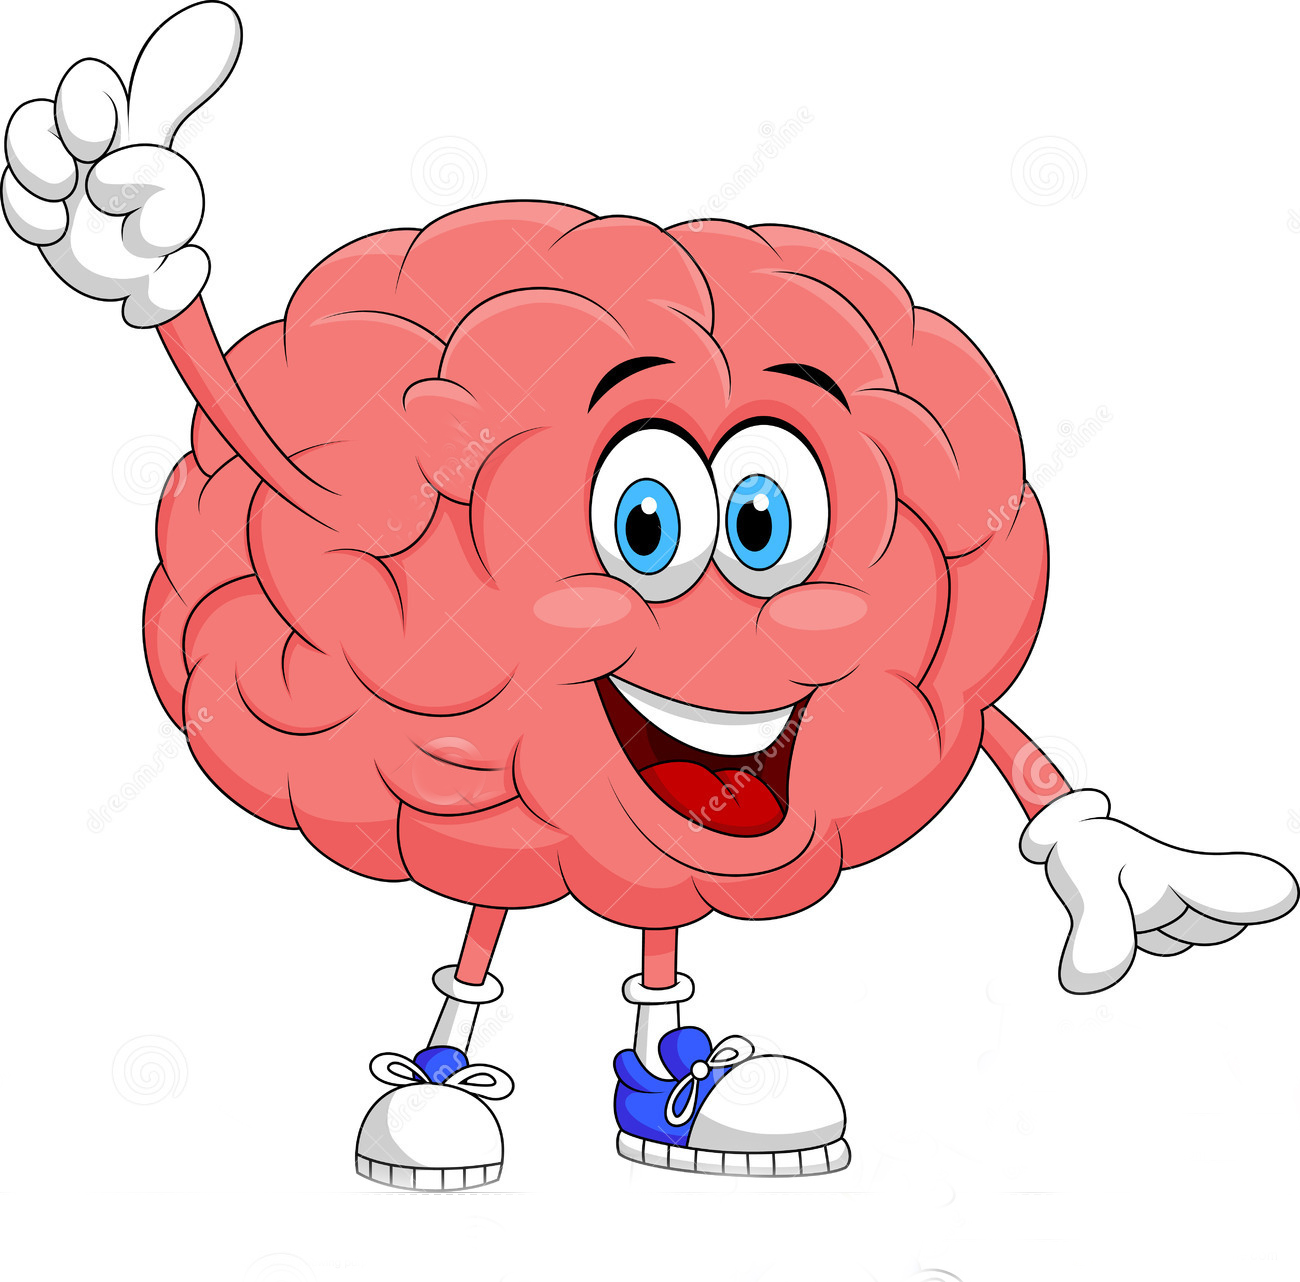 cute-brain-cartoon-character-pointing-illustration-31362138